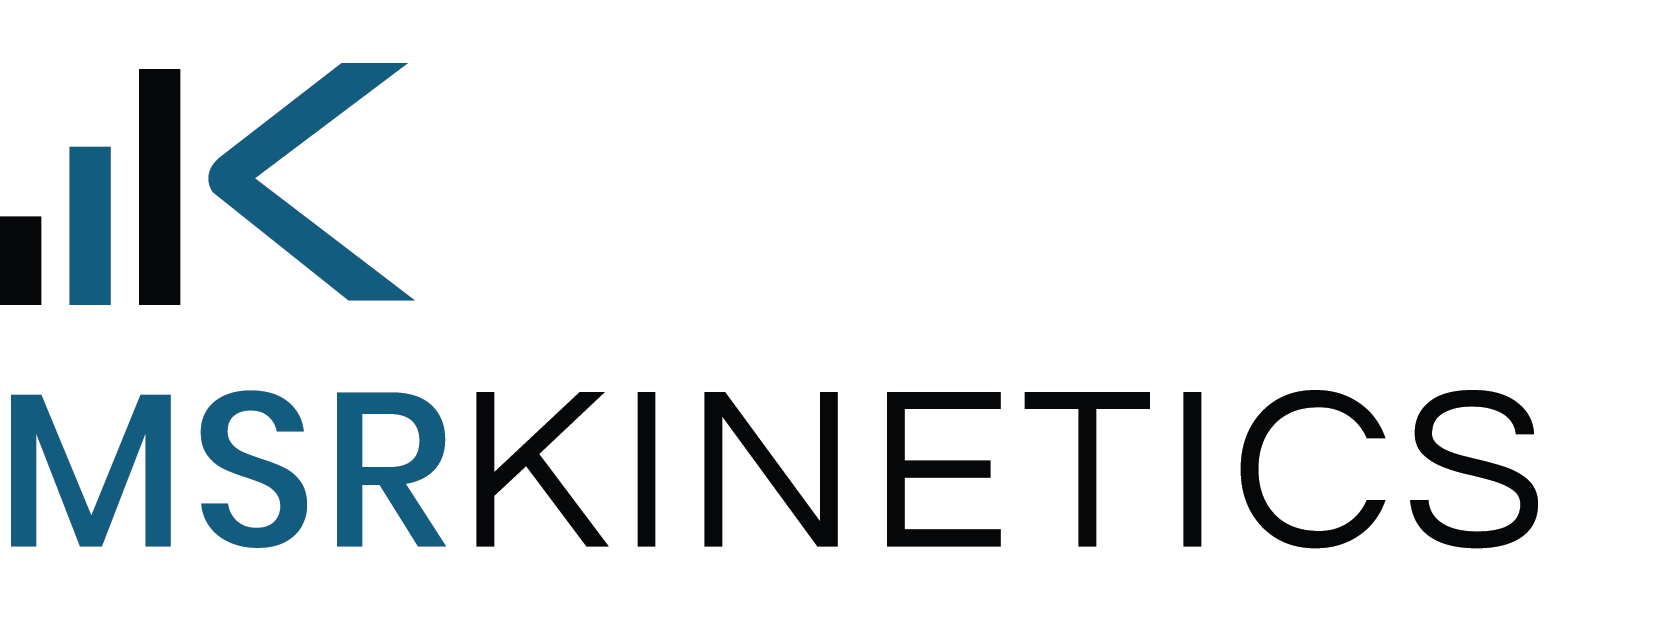 MSRKinetics logo